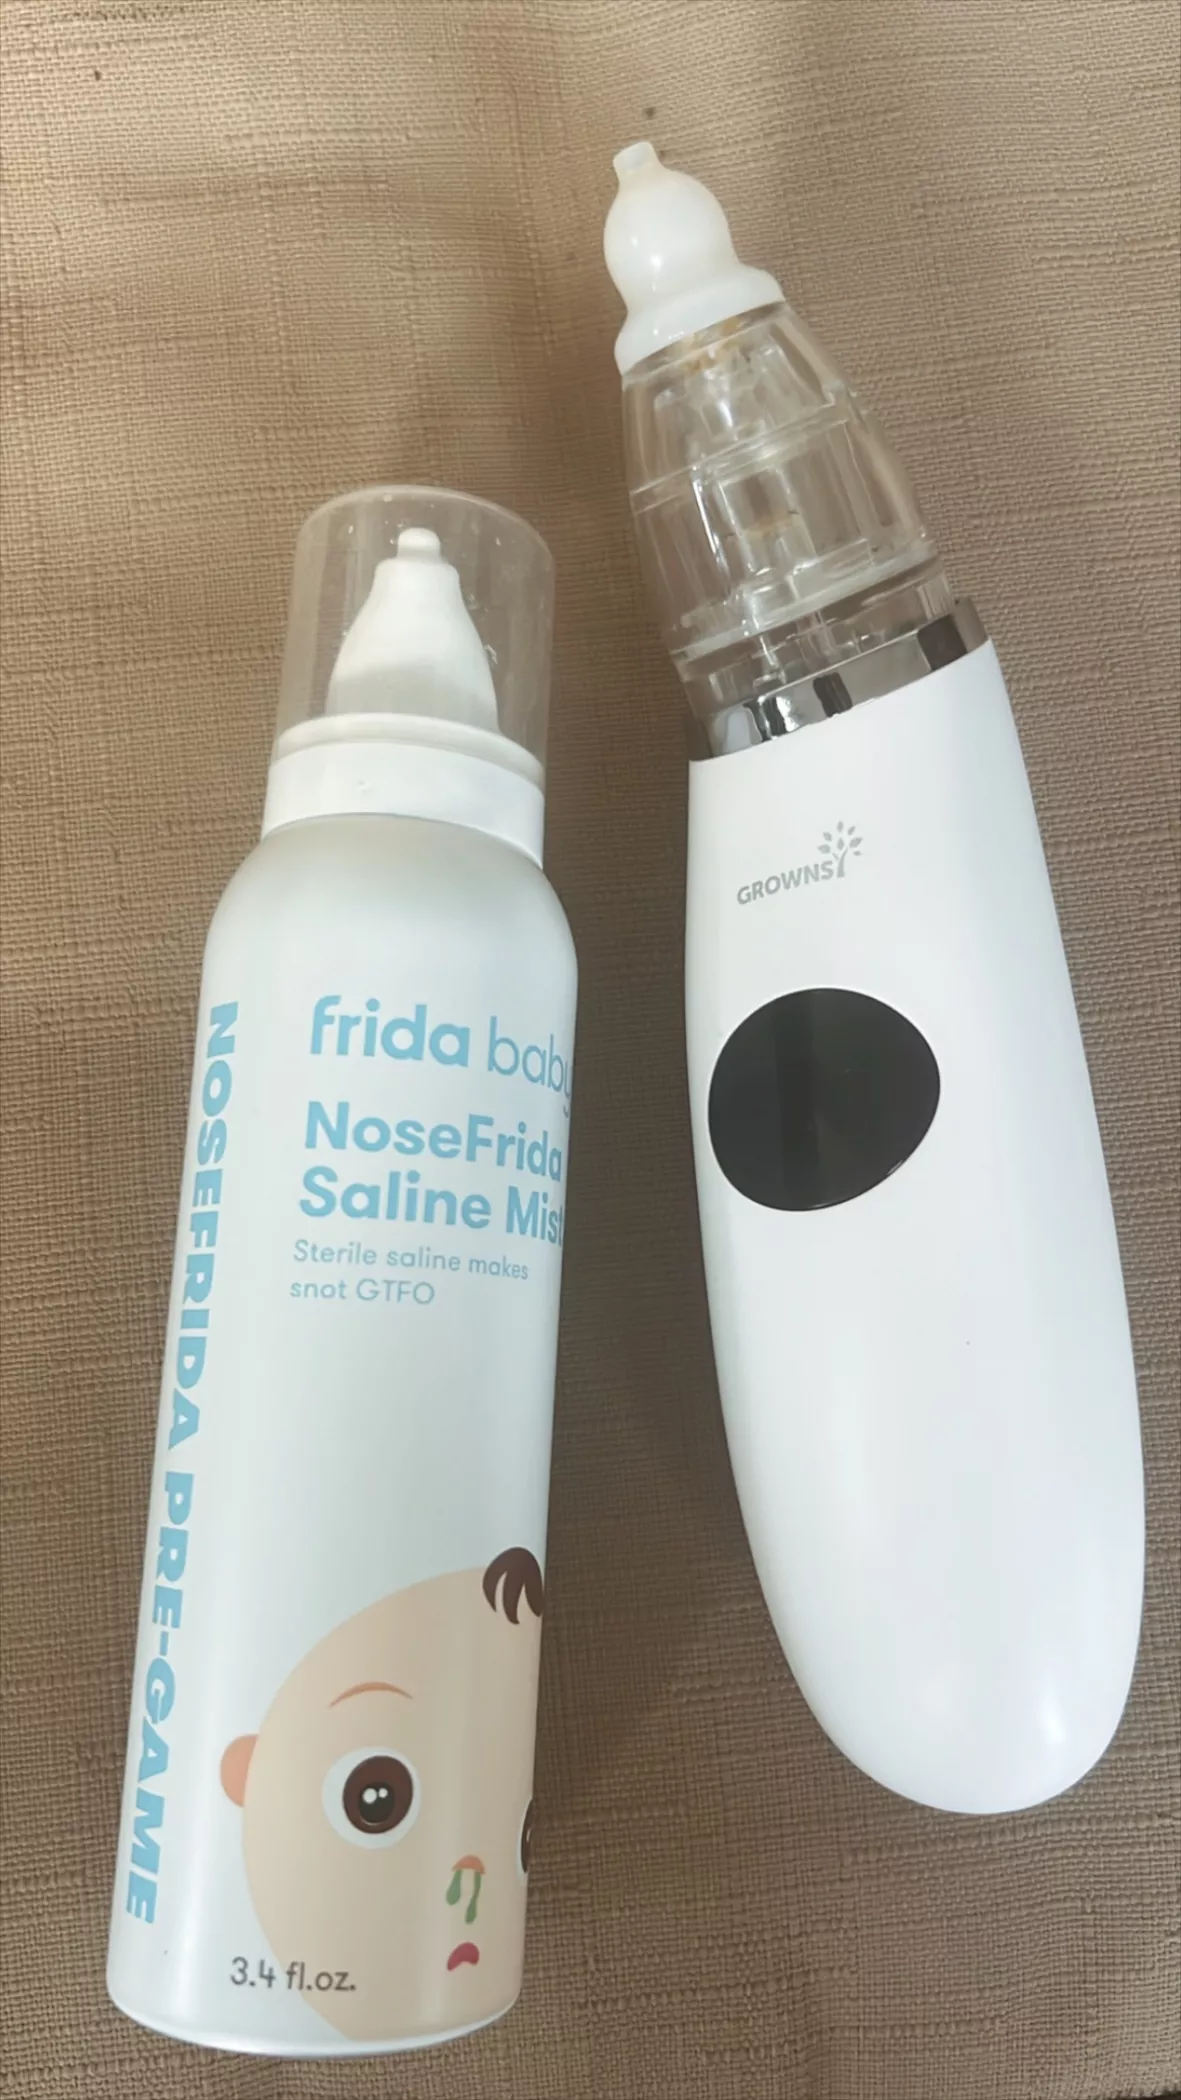 Baby Nasal Aspirator NoseFrida The Snotsucker with 10 Extra Filters and  All-Natural Saline Nasal Spray by Frida Baby